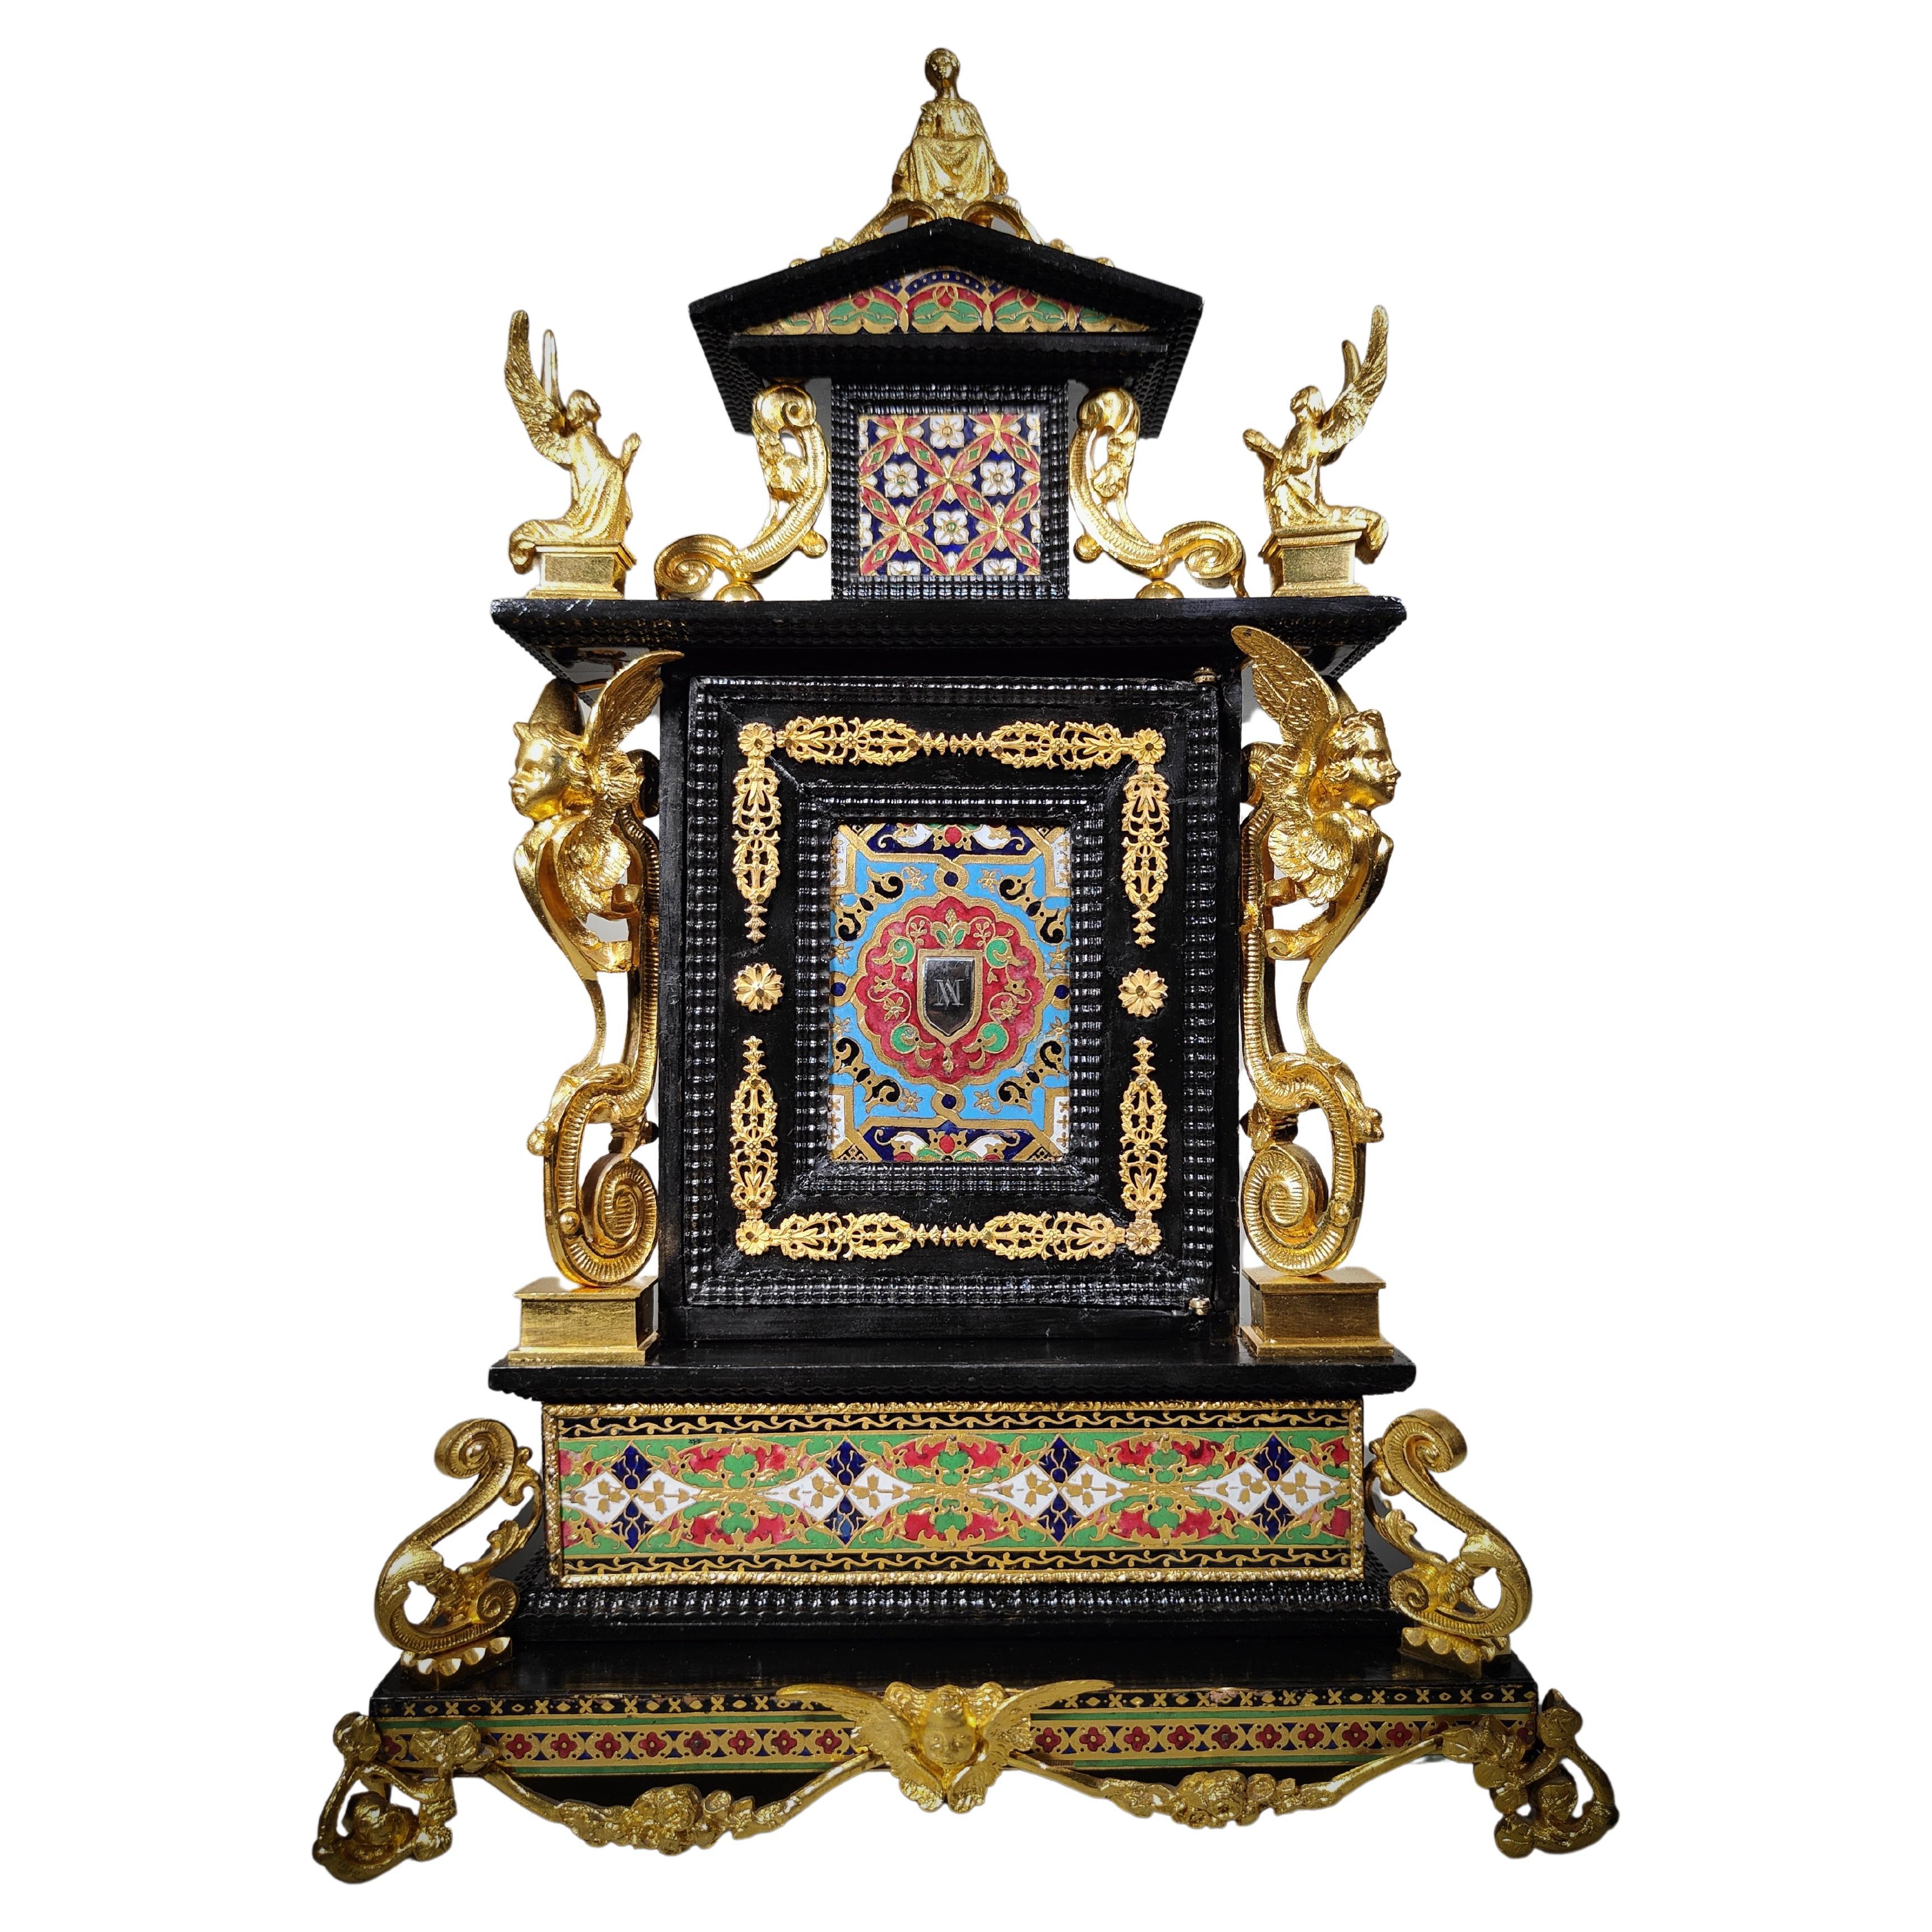 Impressive Tabernacle, Italian Altar, 17th Century